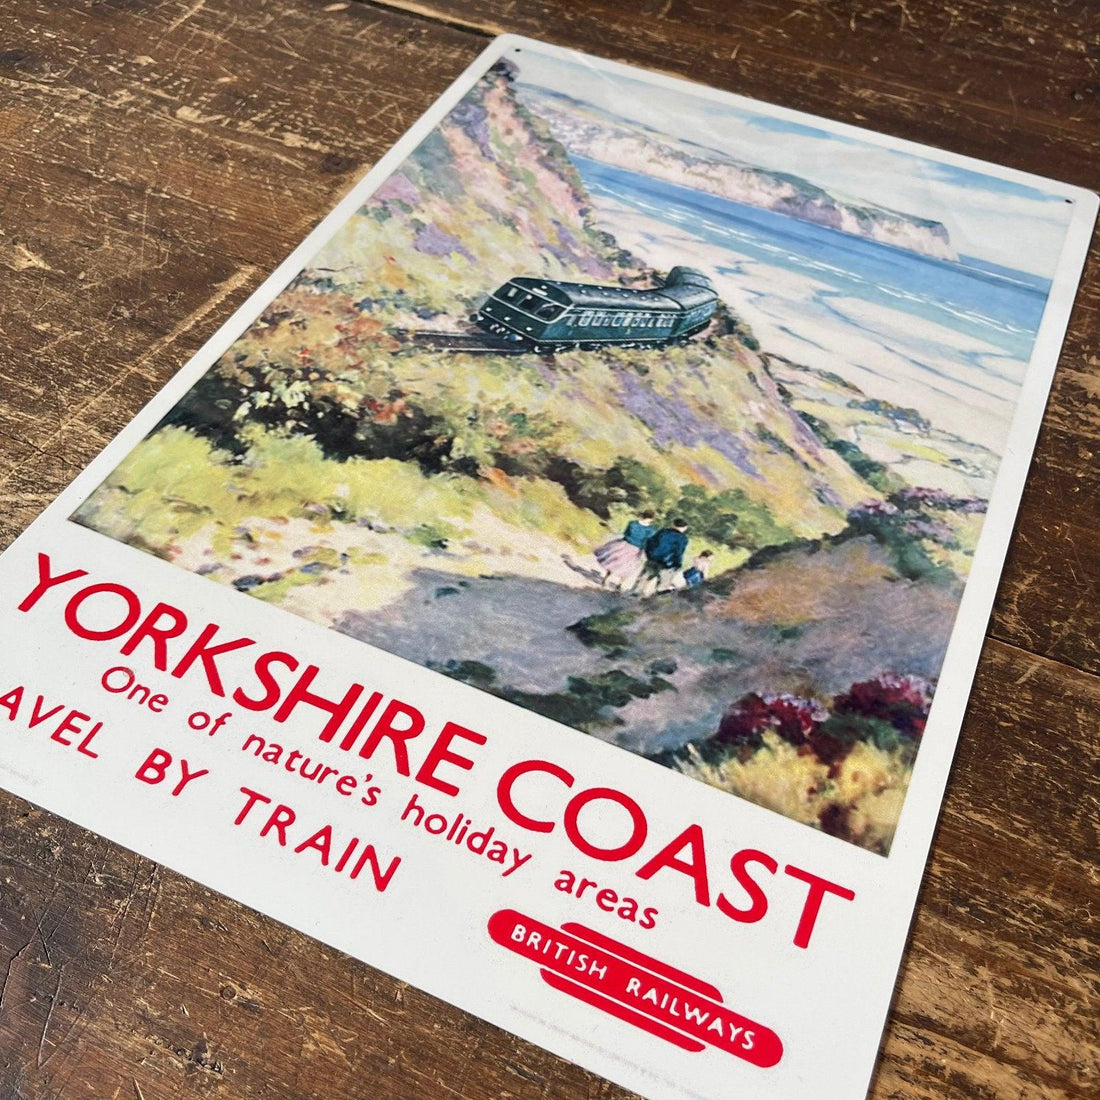 Vintage Metal Sign - British Railways Retro Advertising, Yorkshire Coast - £27.99 - Retro Advertising 